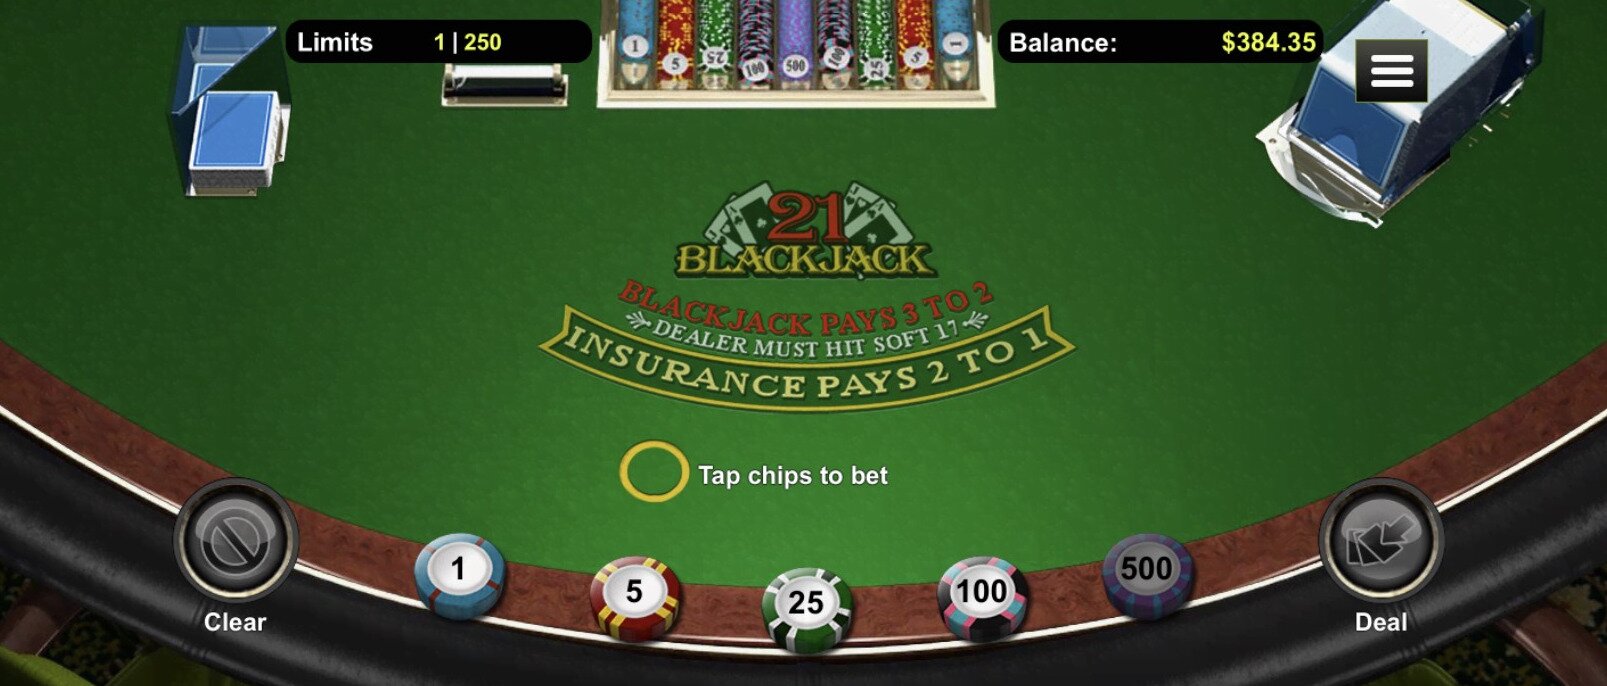 play blackjack for fun online